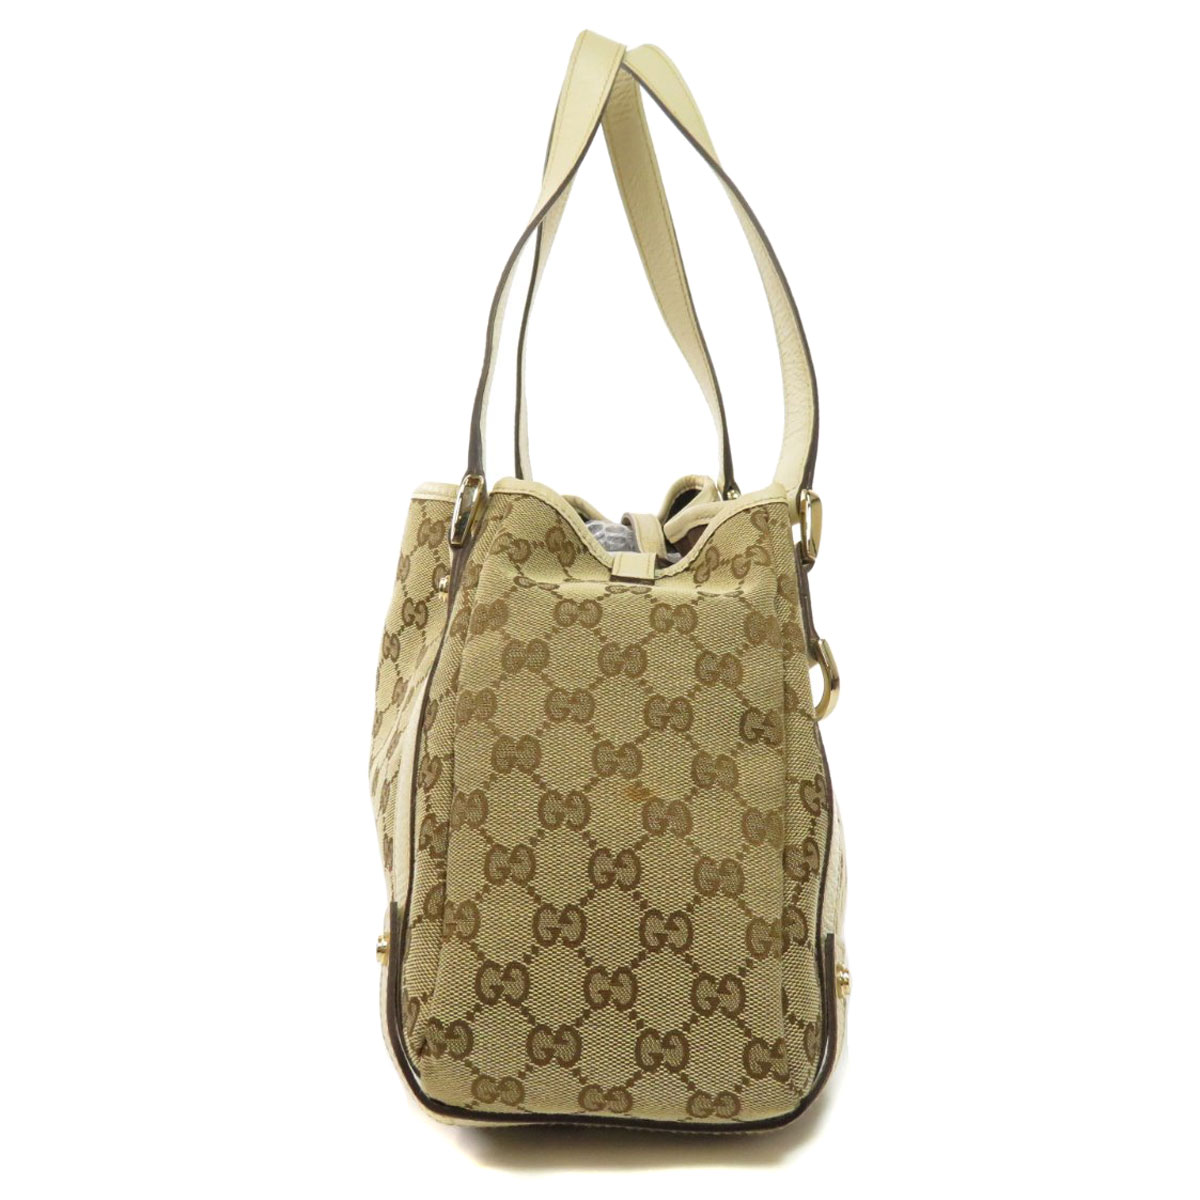 GUCCI 130736 Tote Bag GG pattern Canvas | eBay